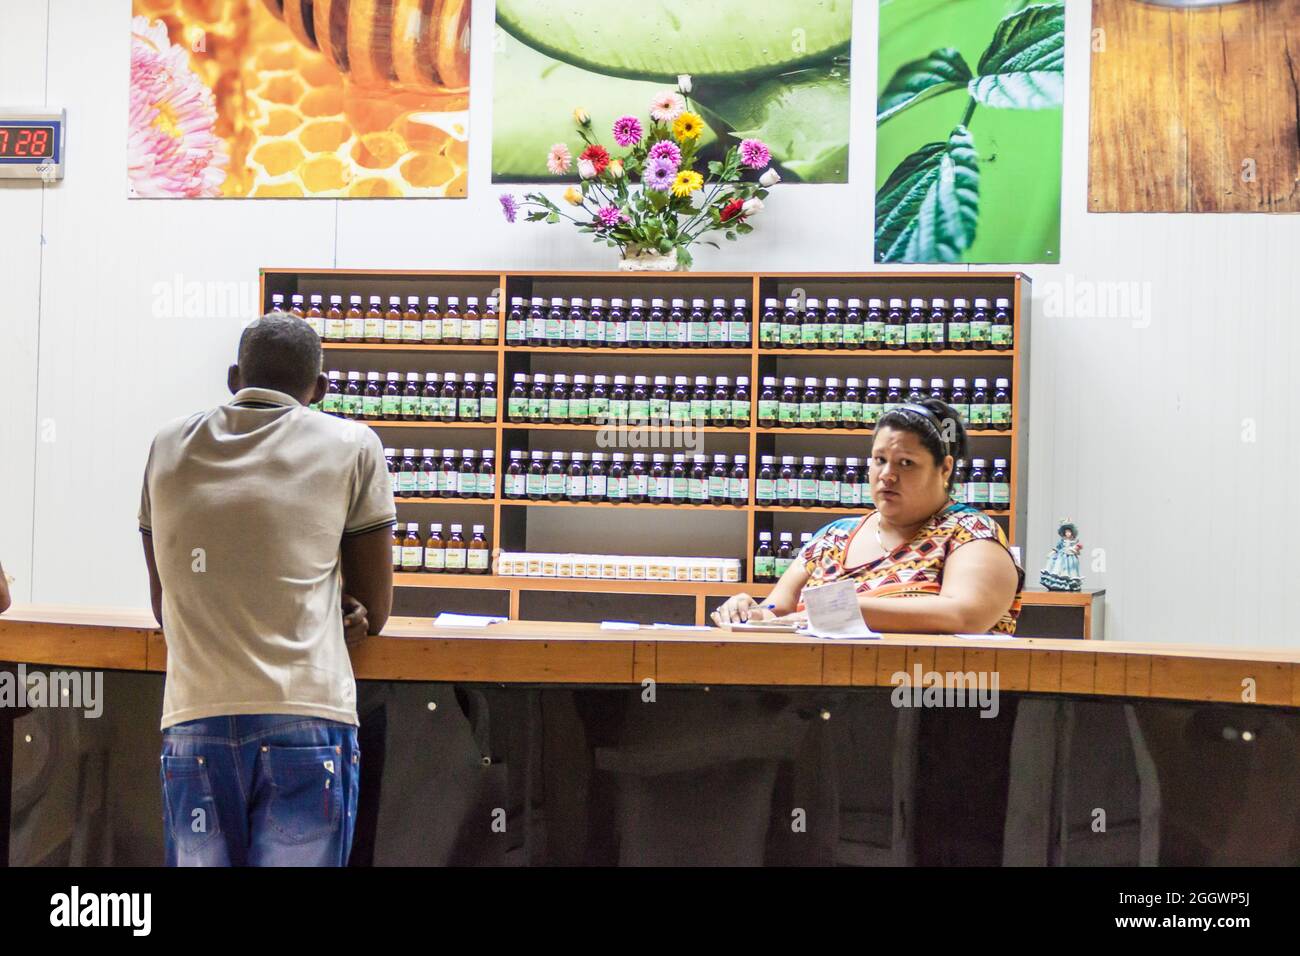 SANTIAGO DE CUBA, KUBA - 1. FEBRUAR 2016: Inneneinrichtung eines lokalen Geschäfts in Santiago de Cuba, Kuba Stockfoto